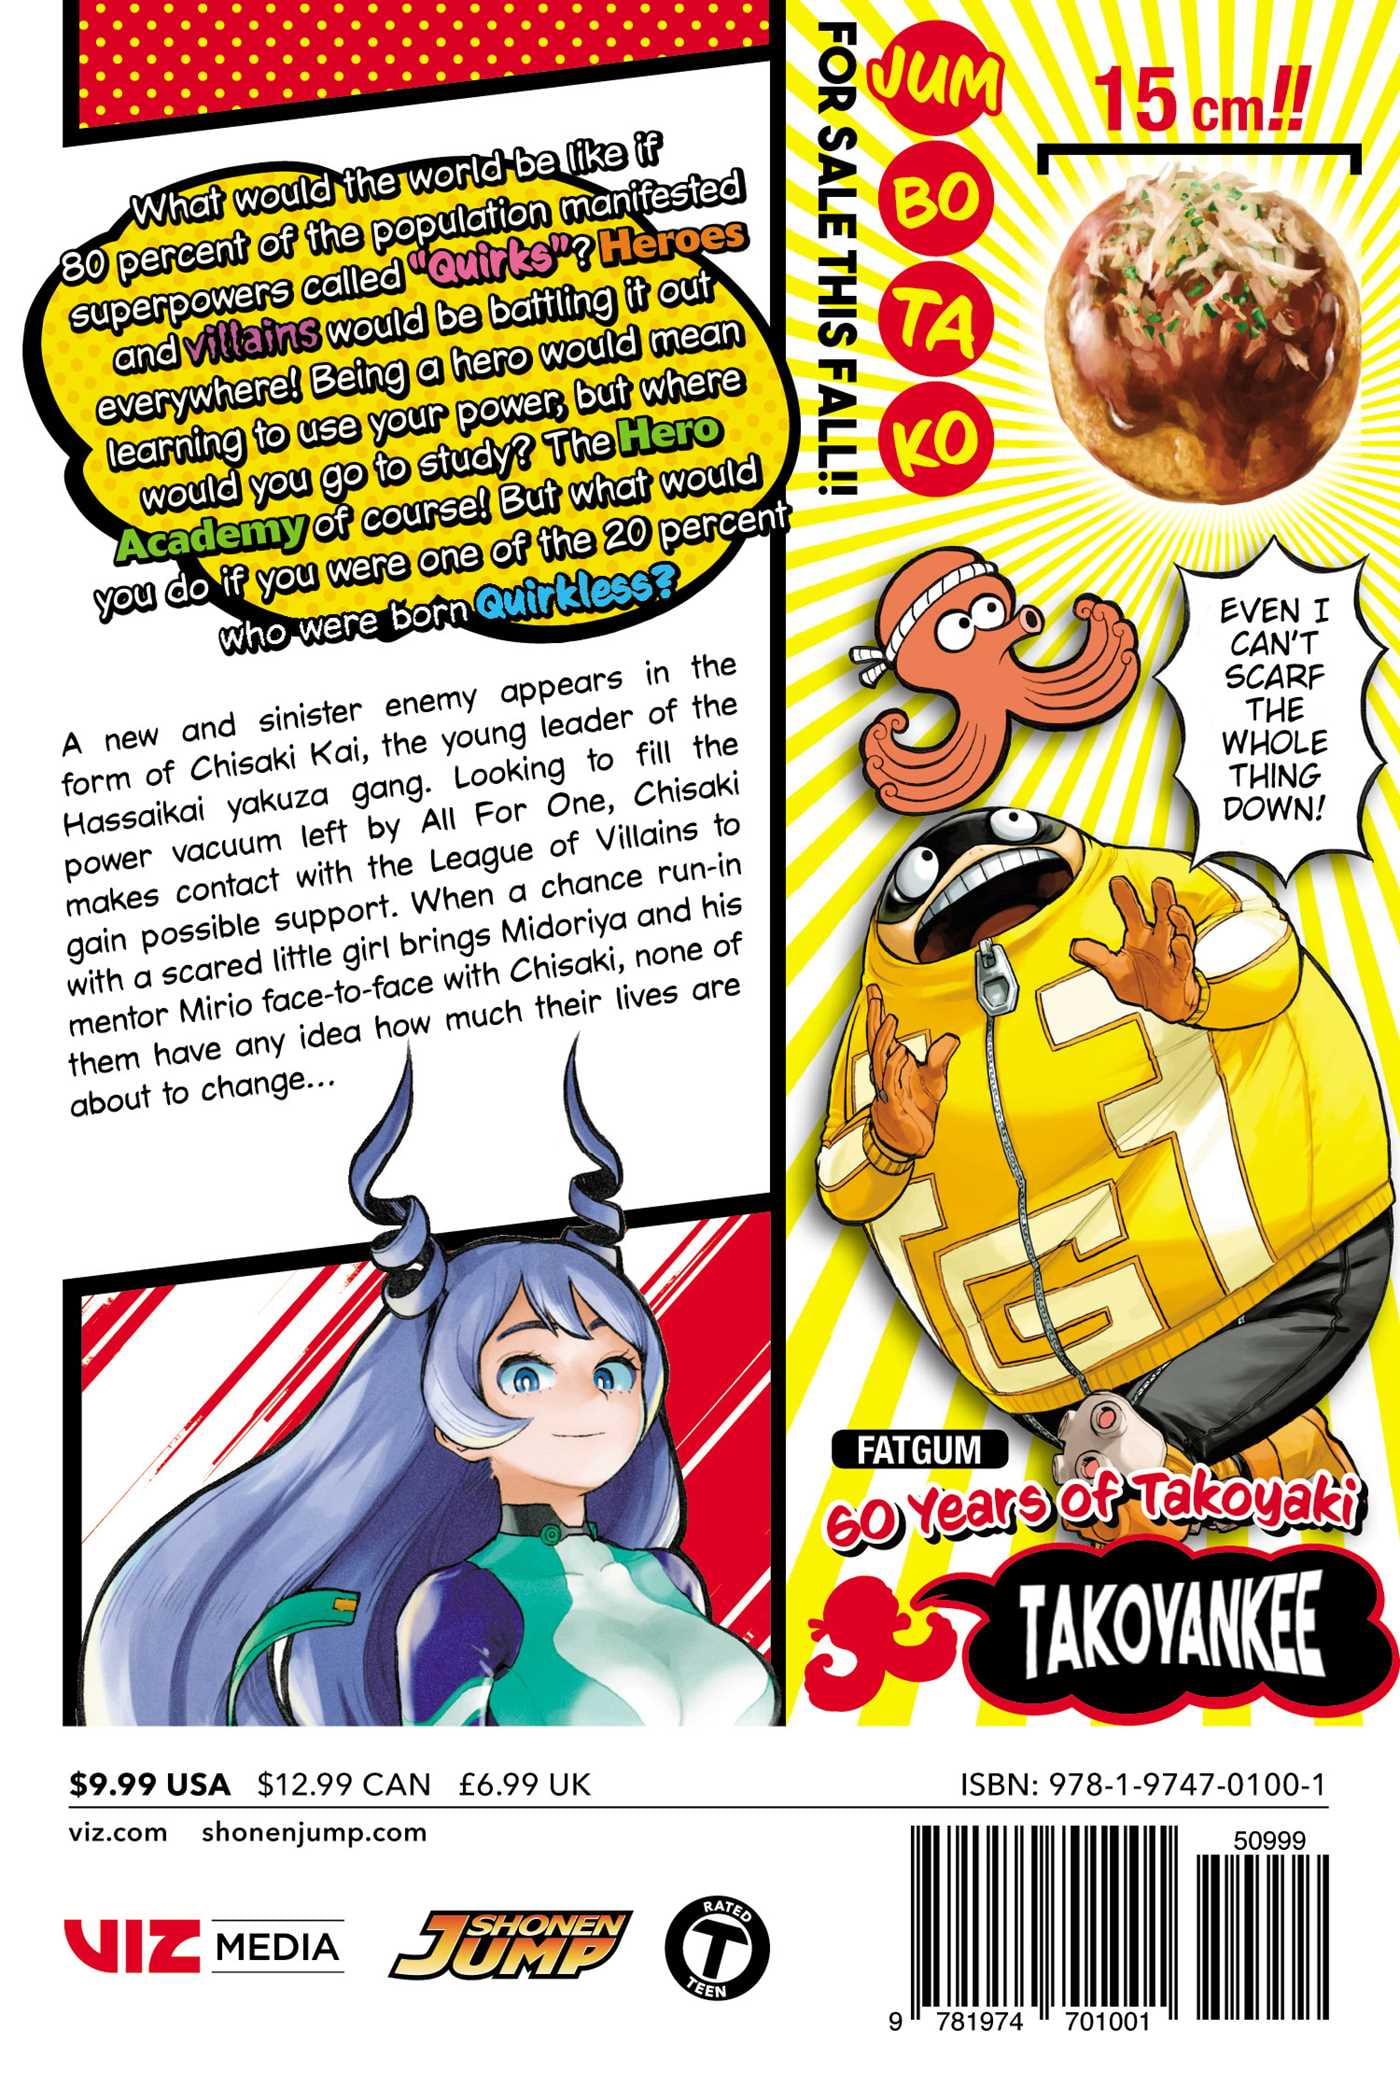 Read My Home Hero Vol.15 Chapter 132: It's My Turn Now on Mangakakalot